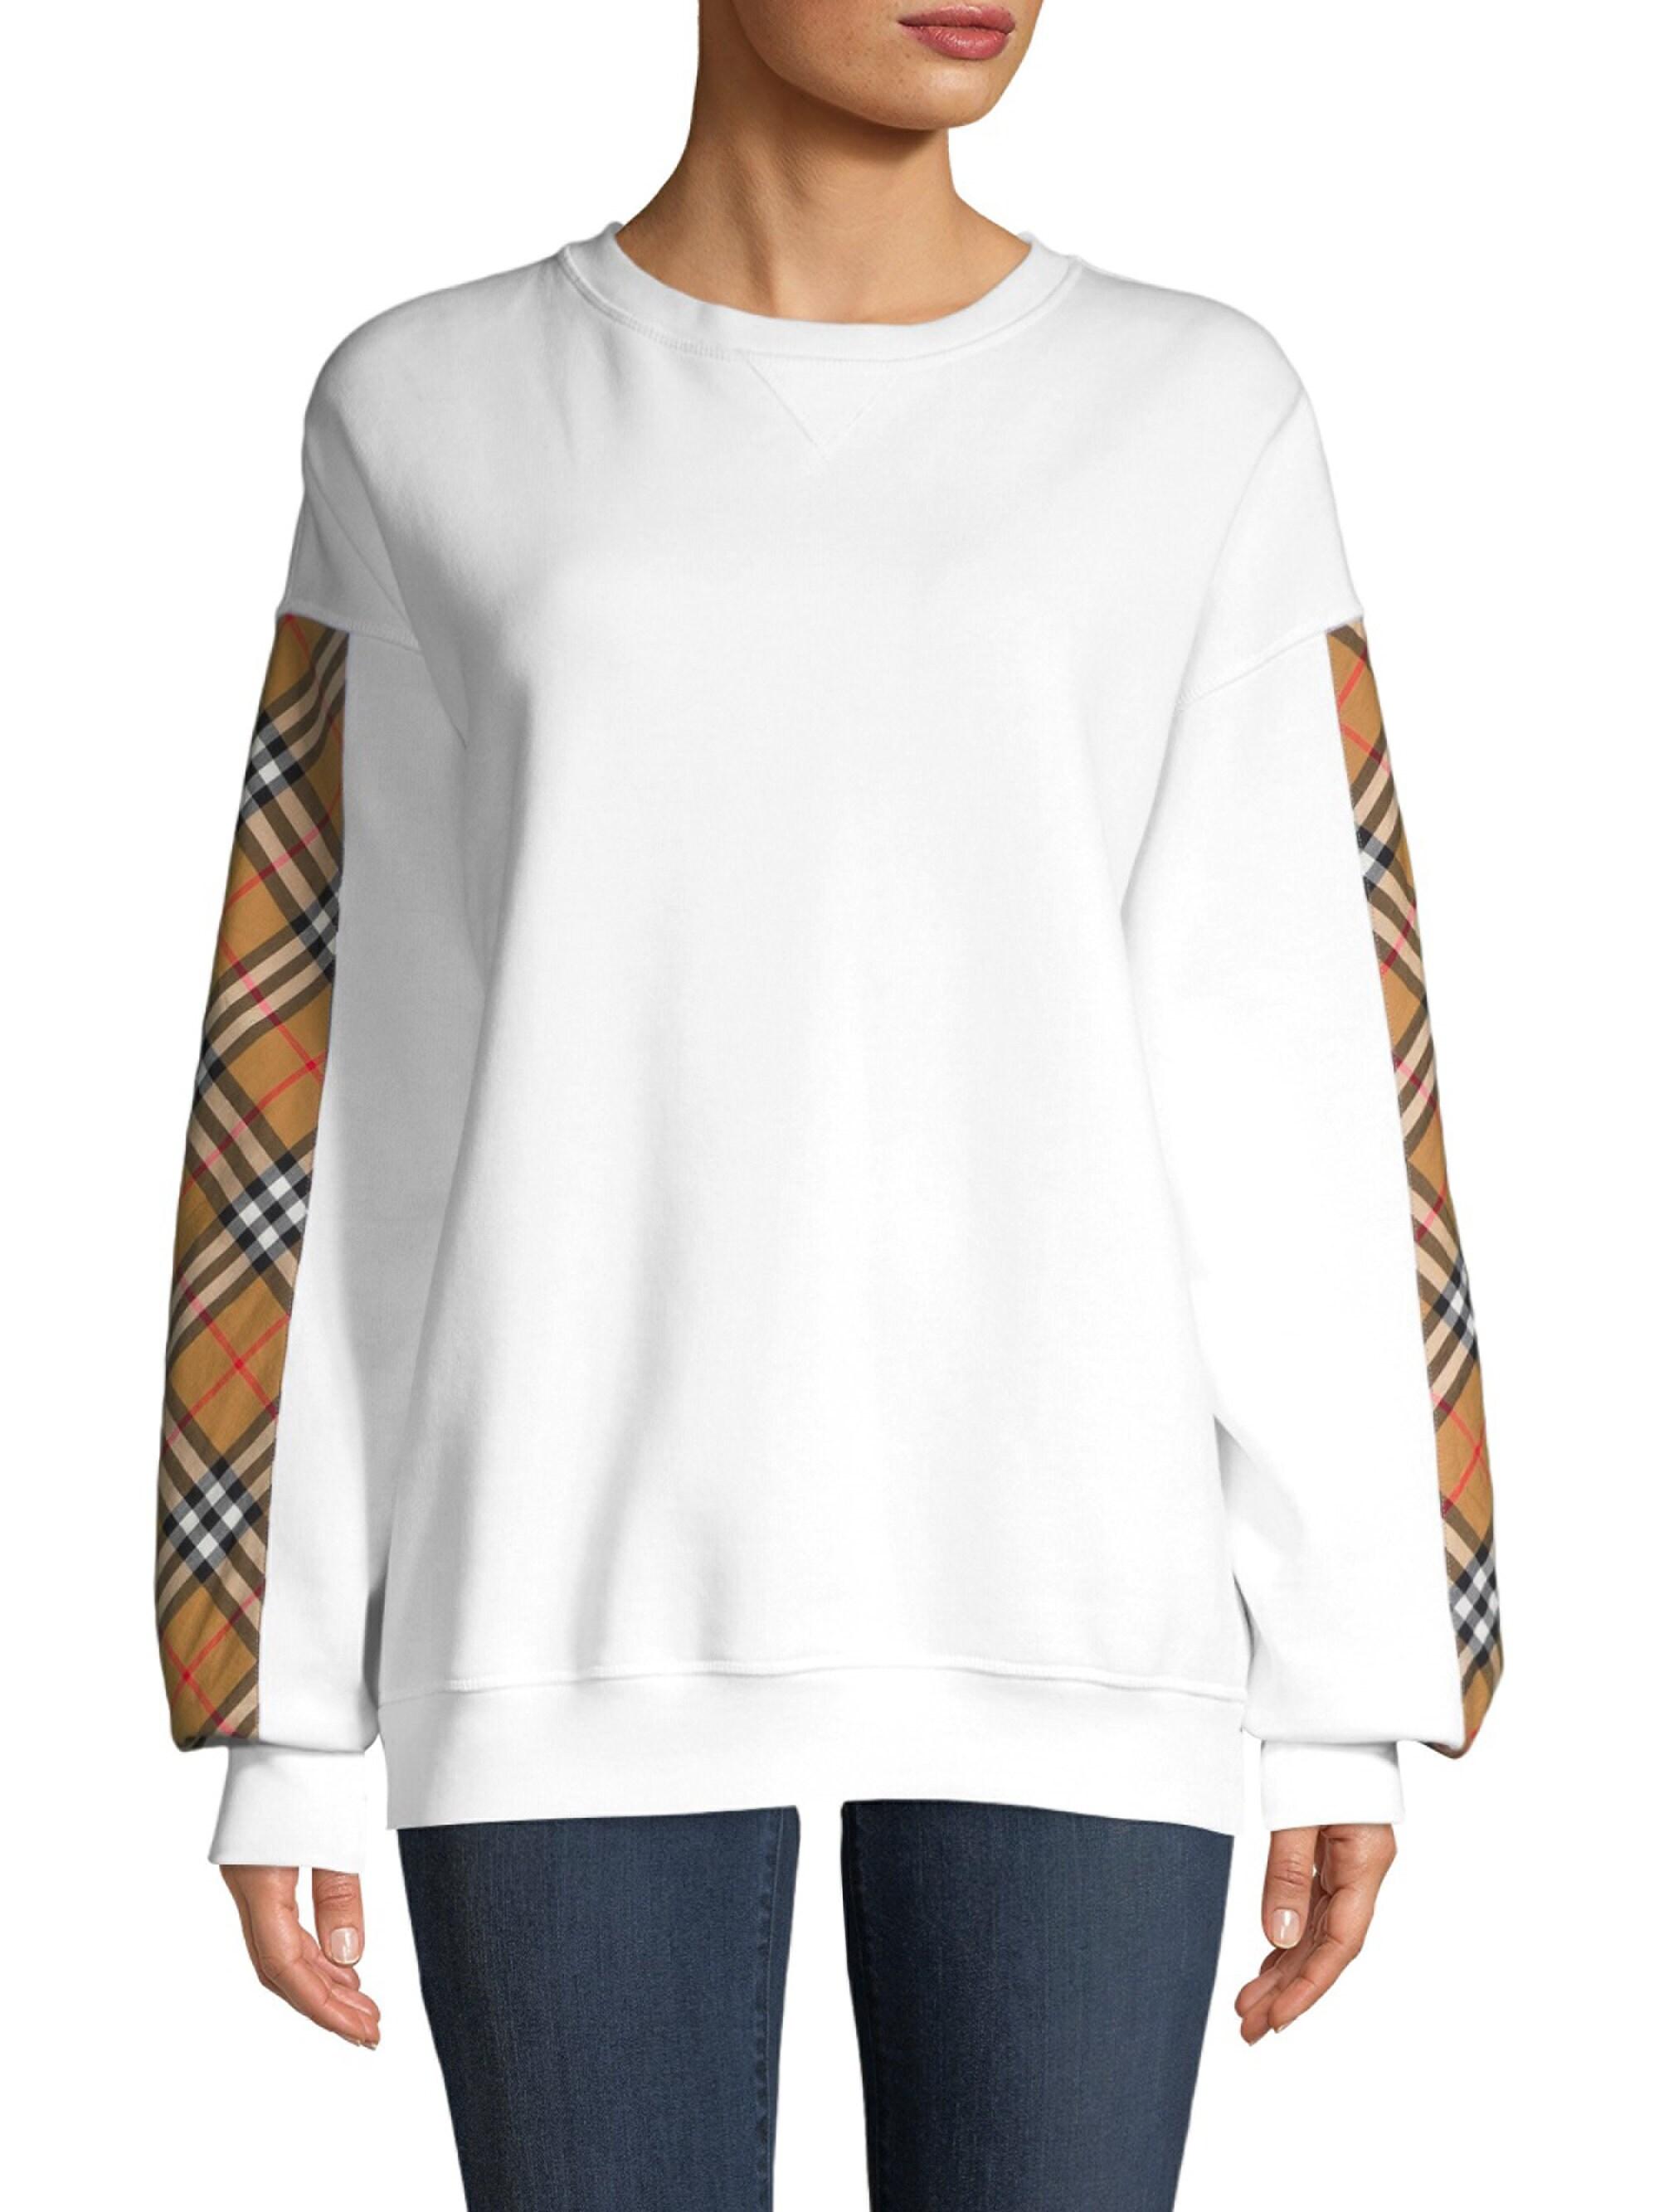 Burberry Satin Vintage Check Detail Cotton Blend Sweatshirt in White - Lyst